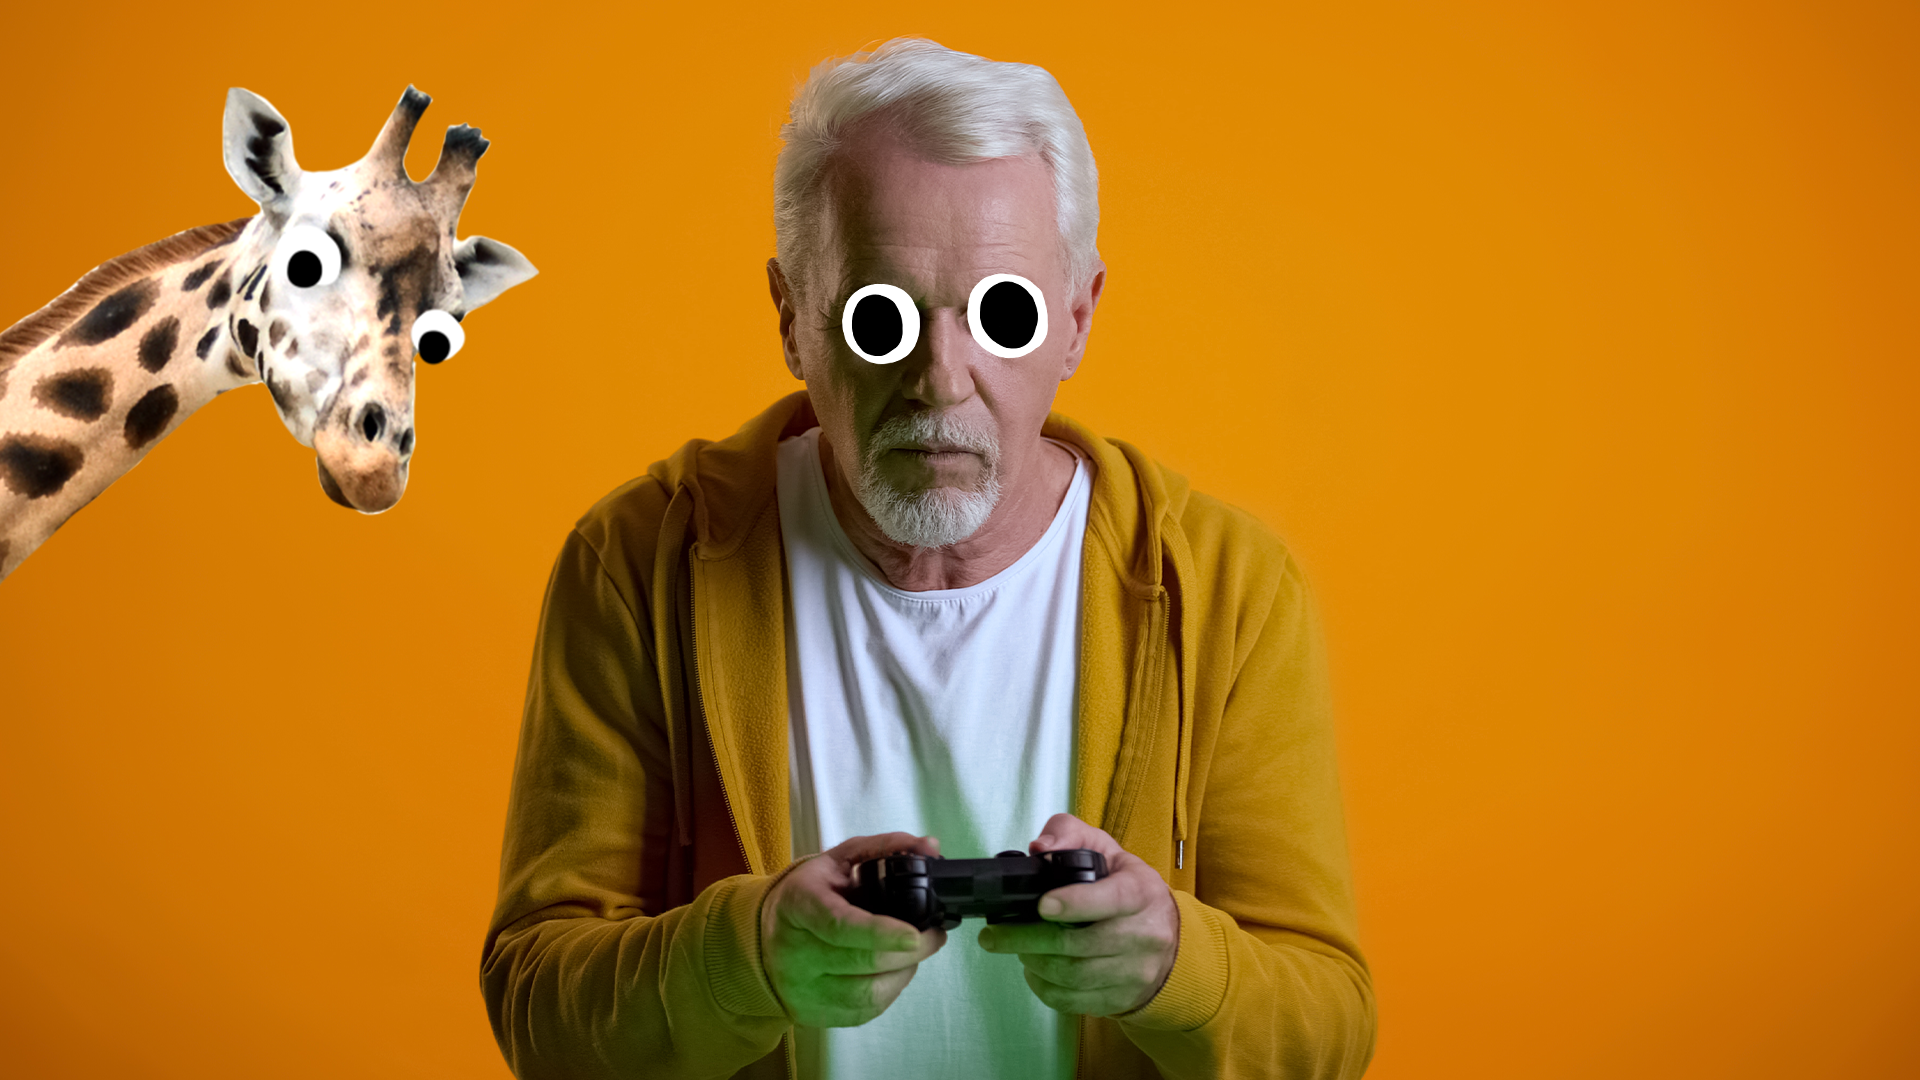 Older man gaming on orange background with Beano giraffe